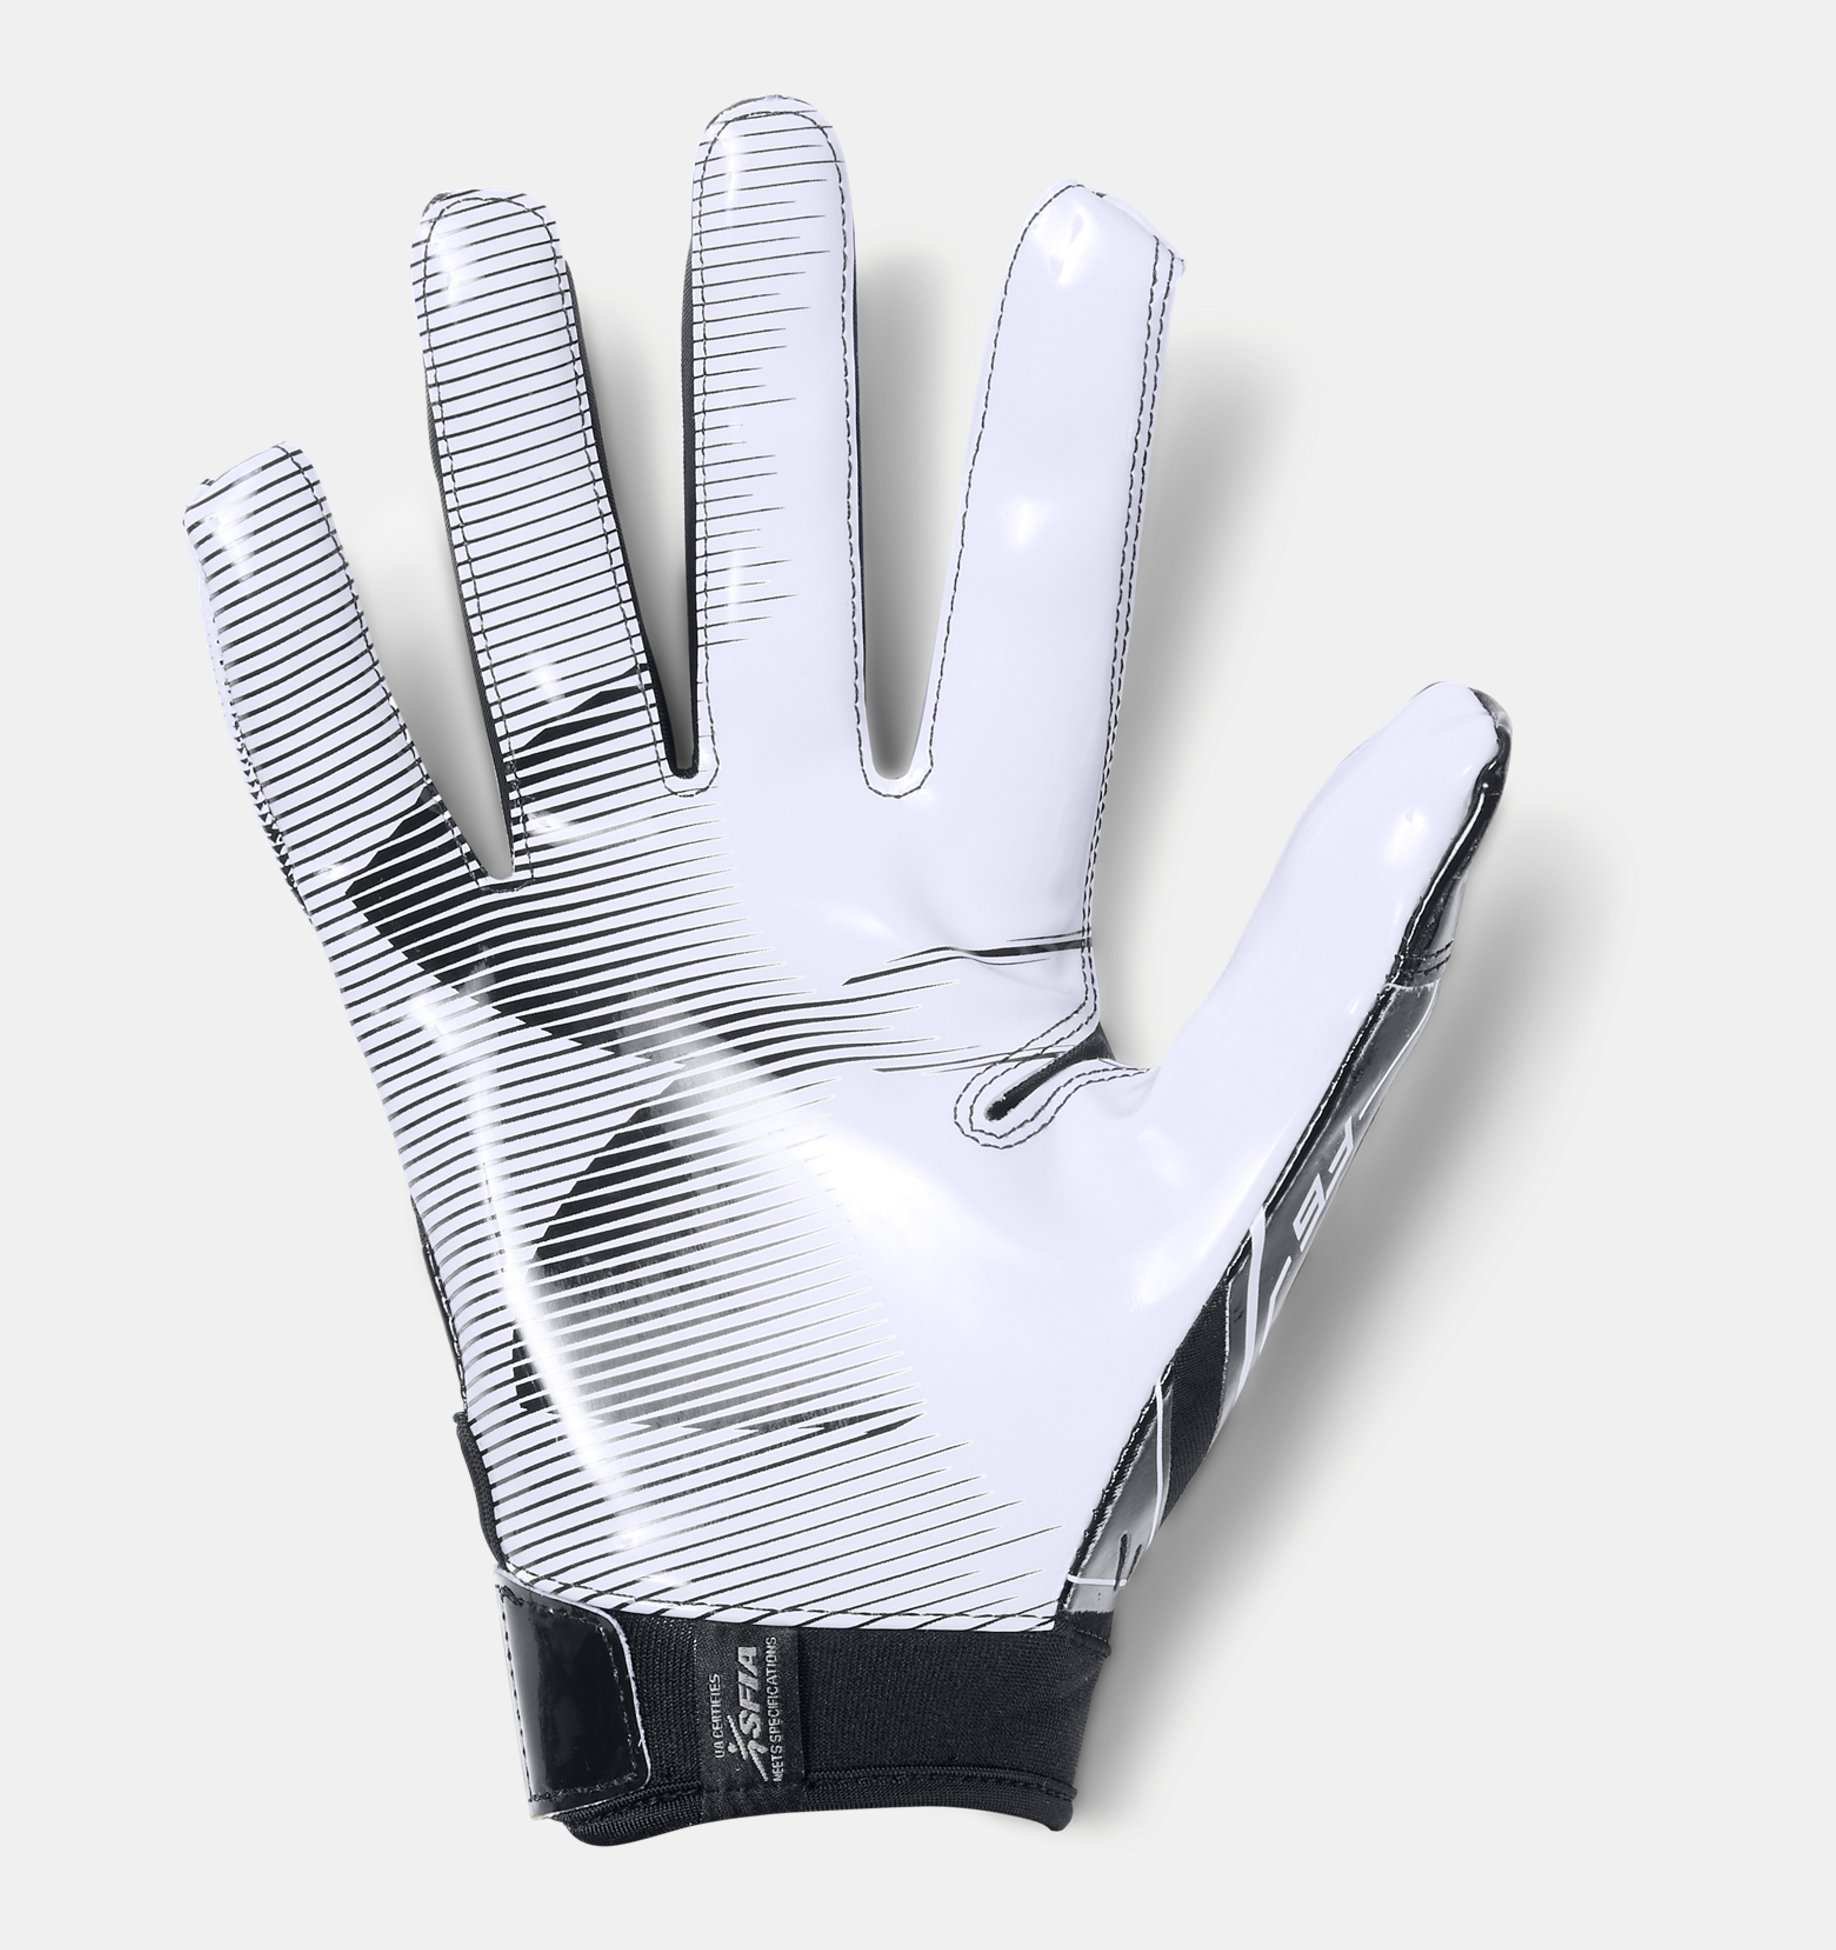 Details about   Under Armour F6 Football Receiver Gloves Sz XL-M Black White Glue Grip 